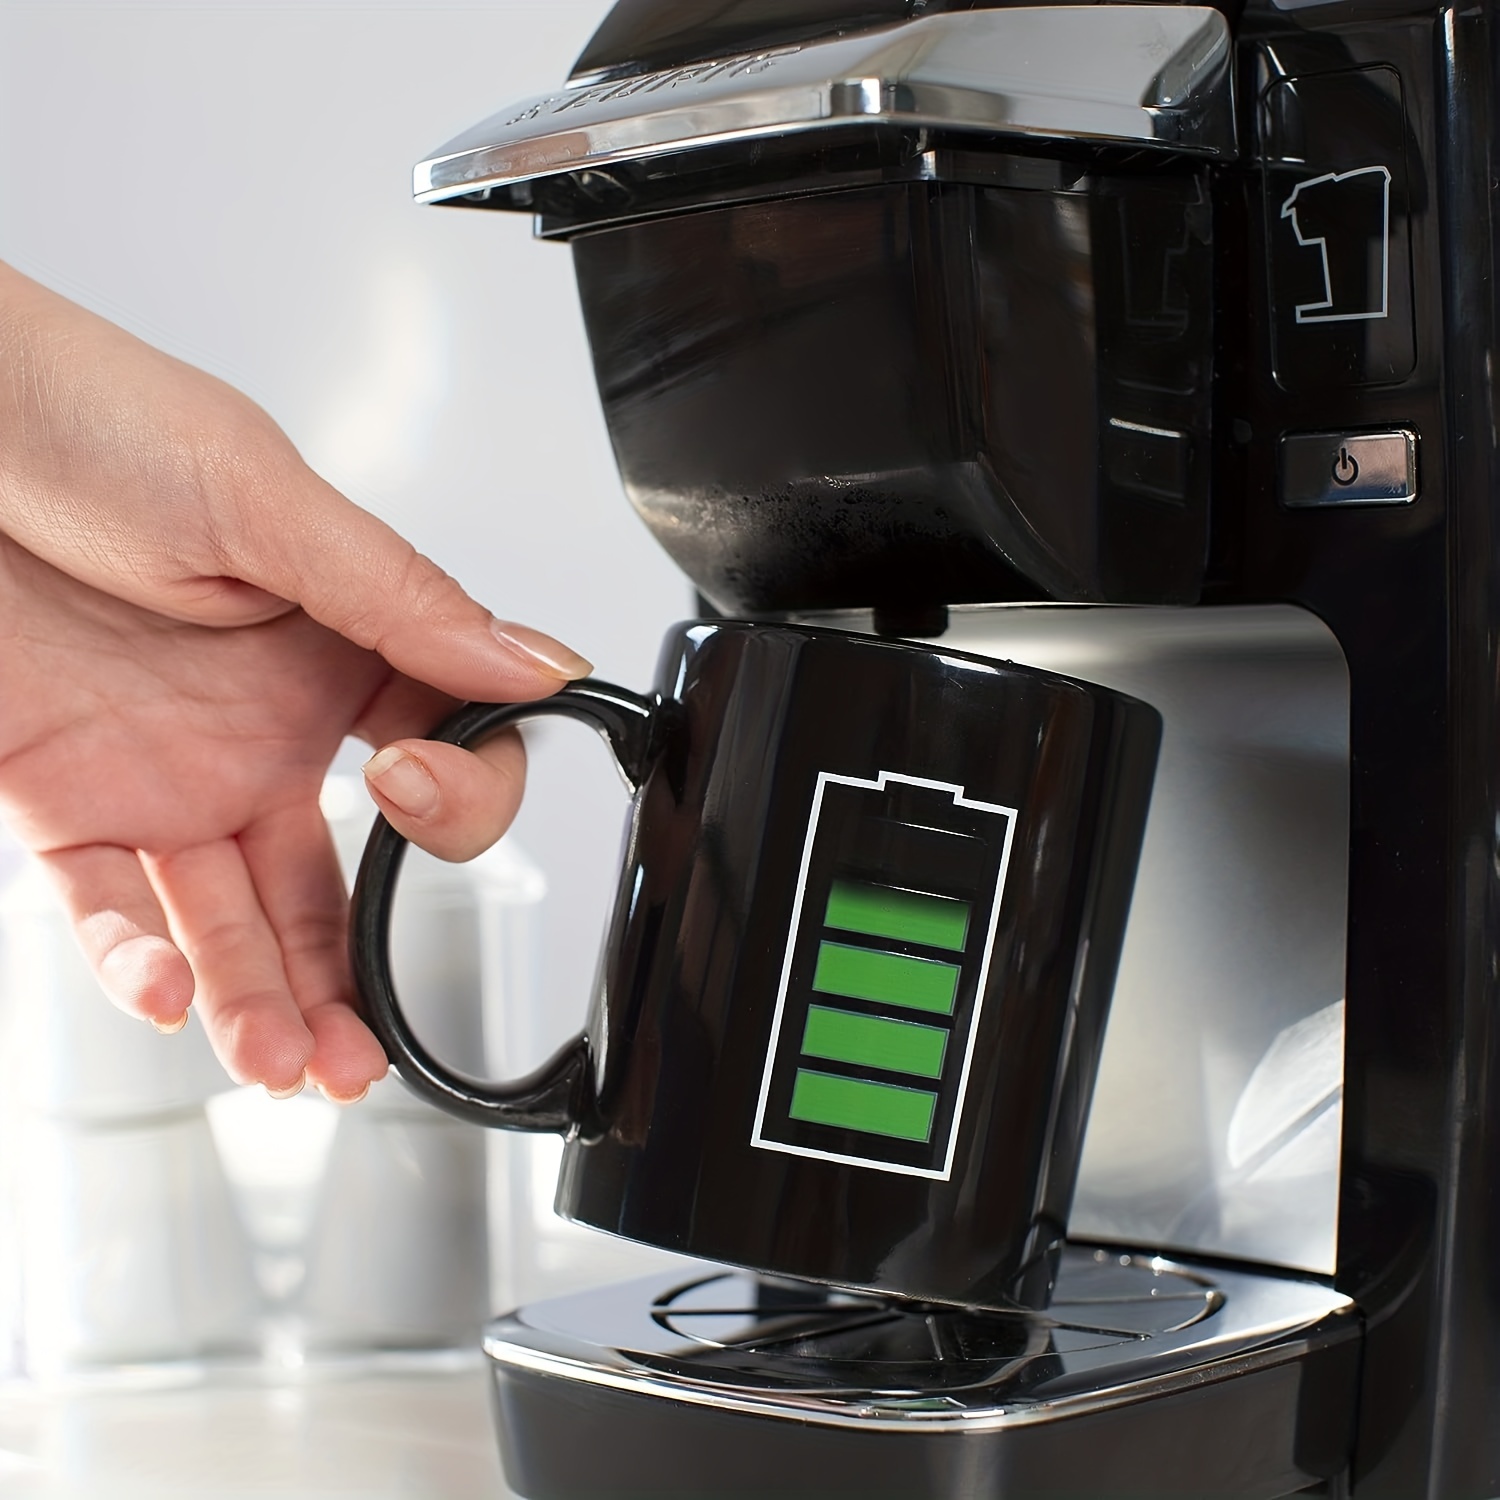 Color Changing Coffee Mug, Cool Coffee & Tea Magic Heat Sensitive